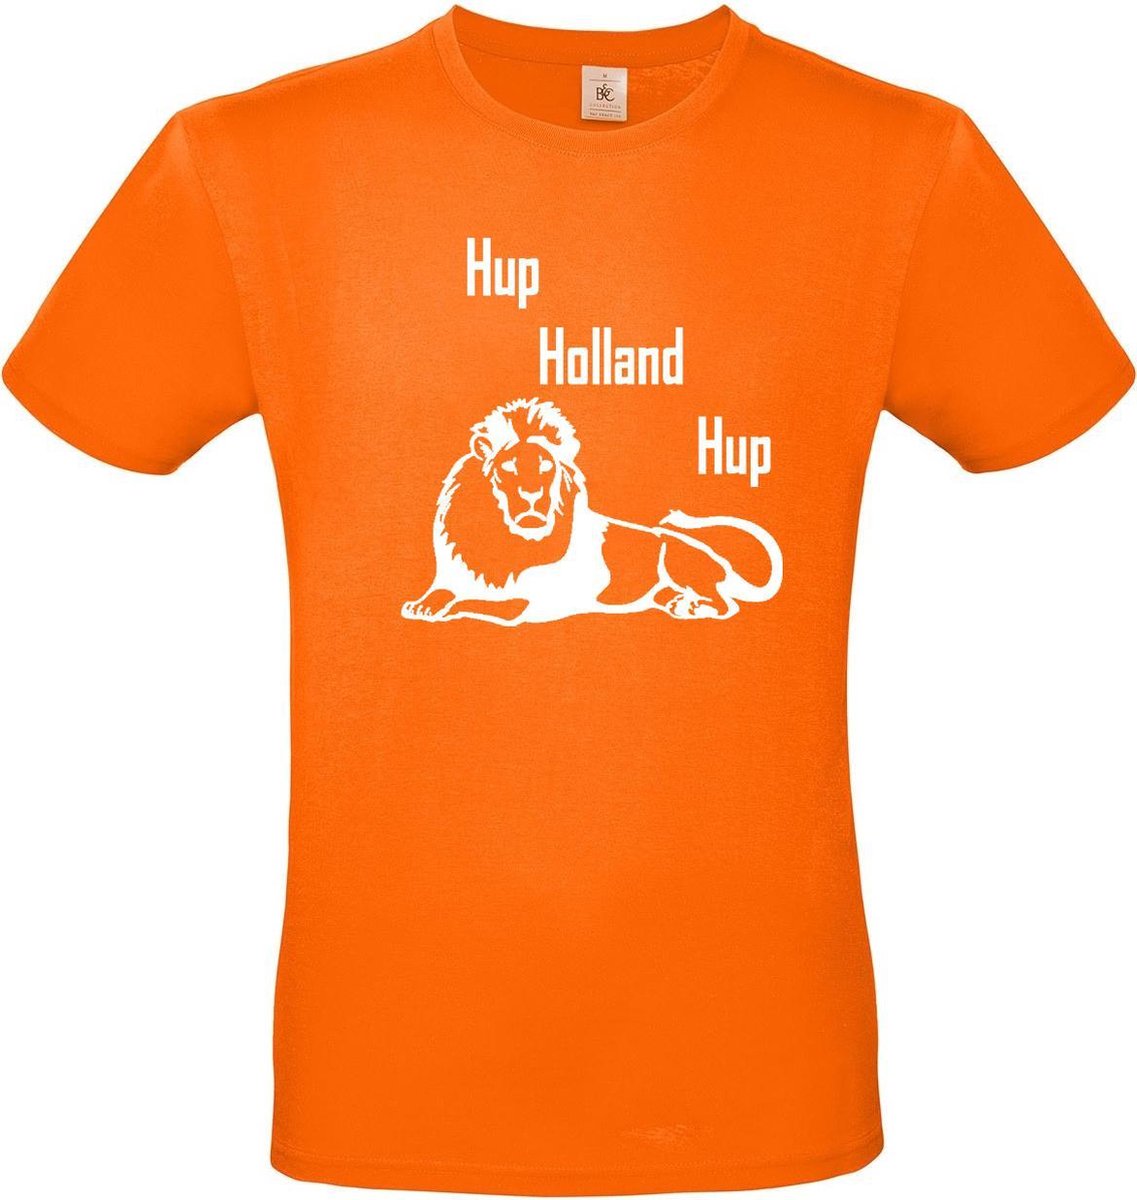 T-shirt met opdruk “Hup Holland Hup” | EK 2021 | Oranje T-shirt met witte opdruk. | Herojodeals